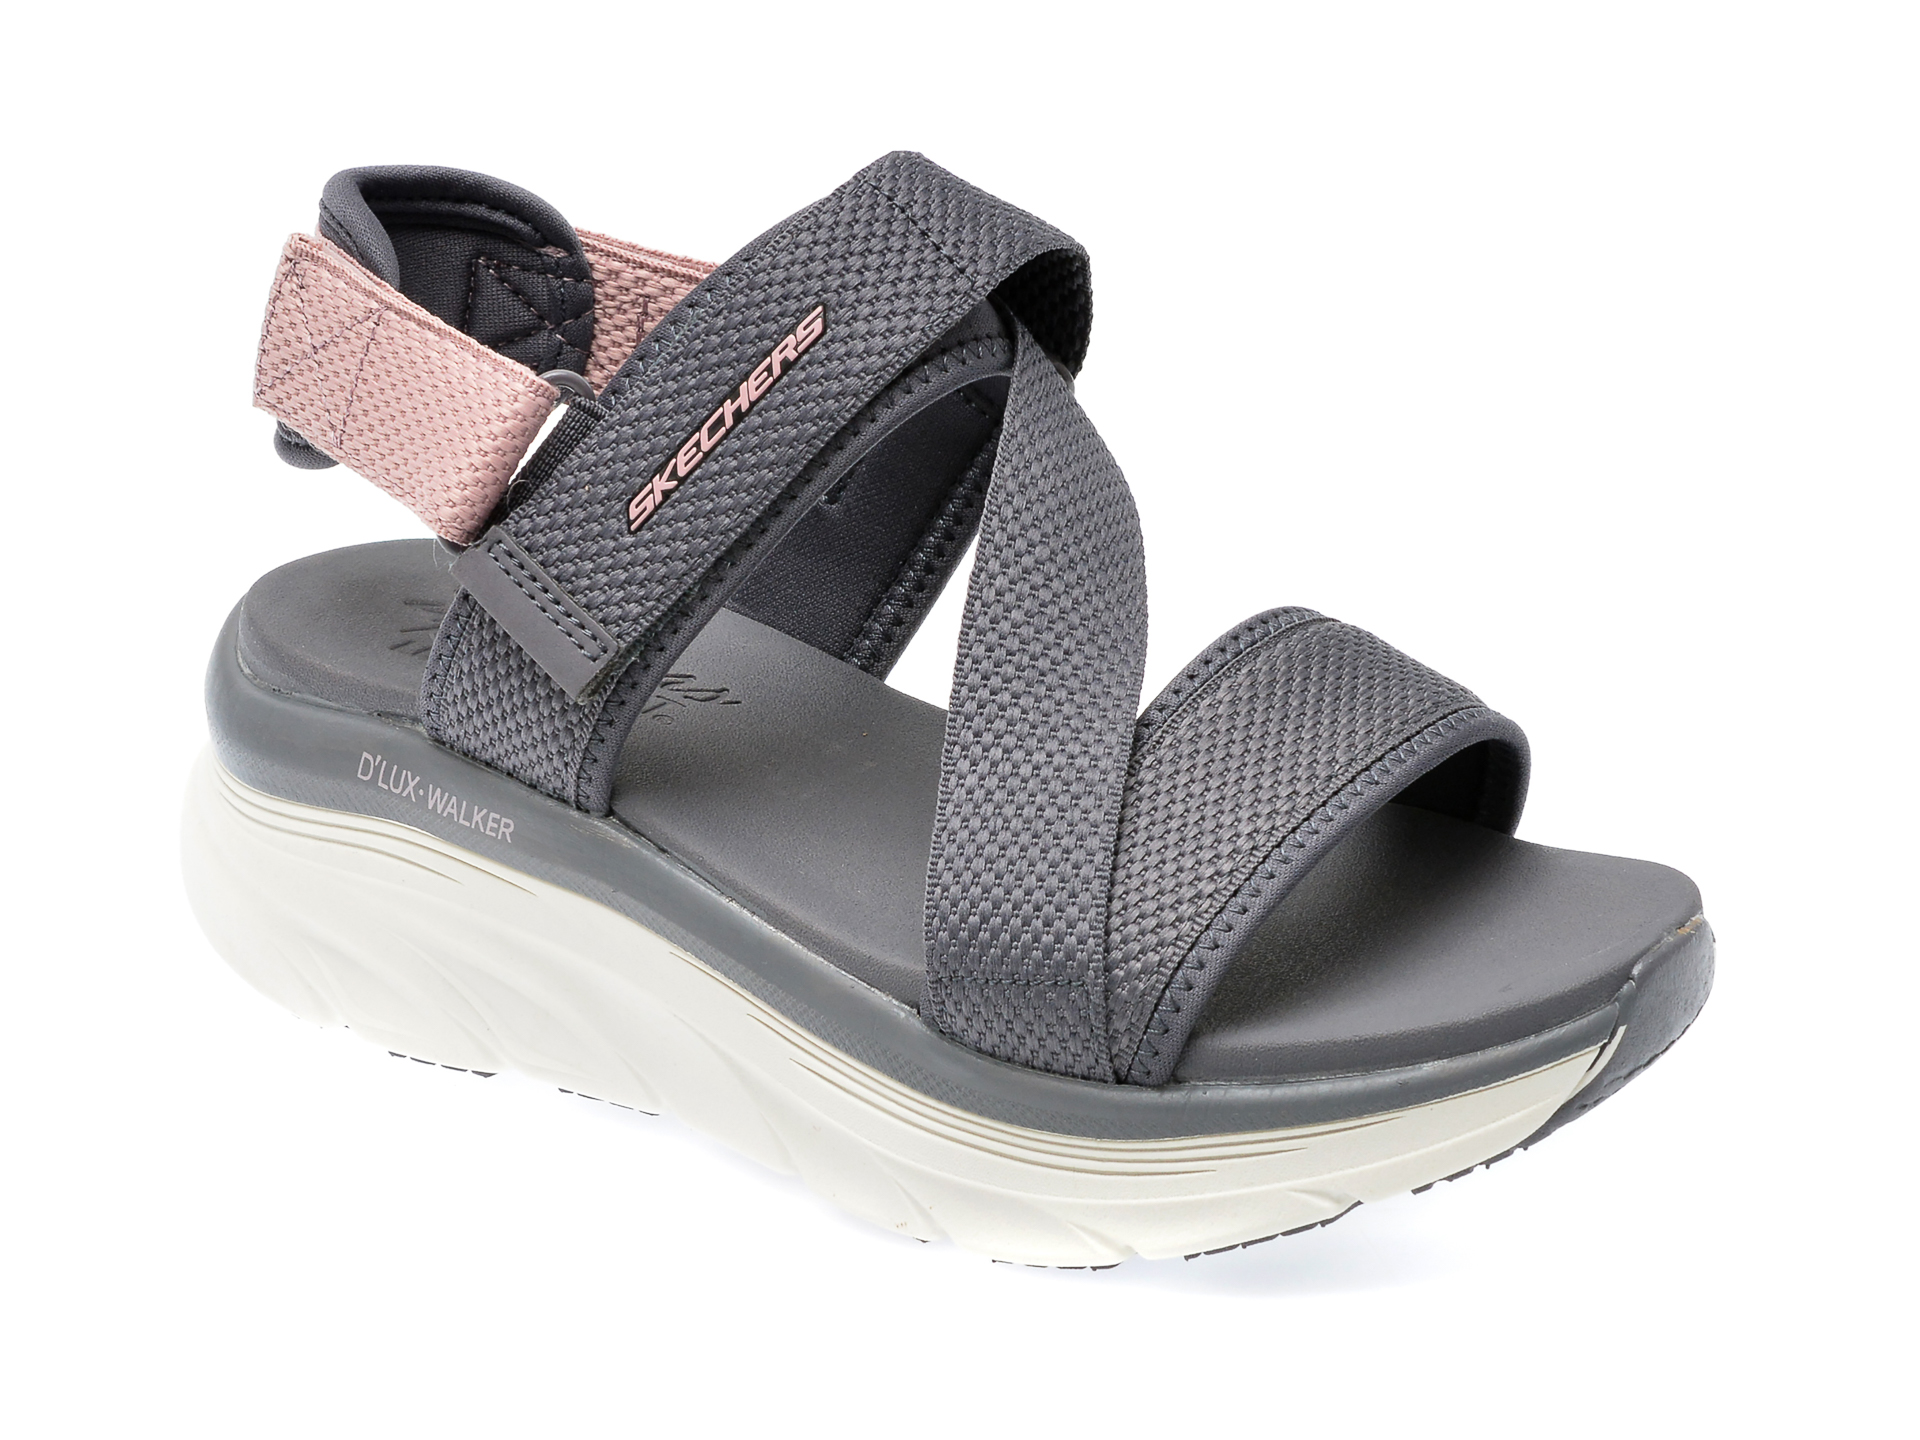 Sandale SKECHERS gri, D LUX WALKER, din material textil Answear 2023-05-28